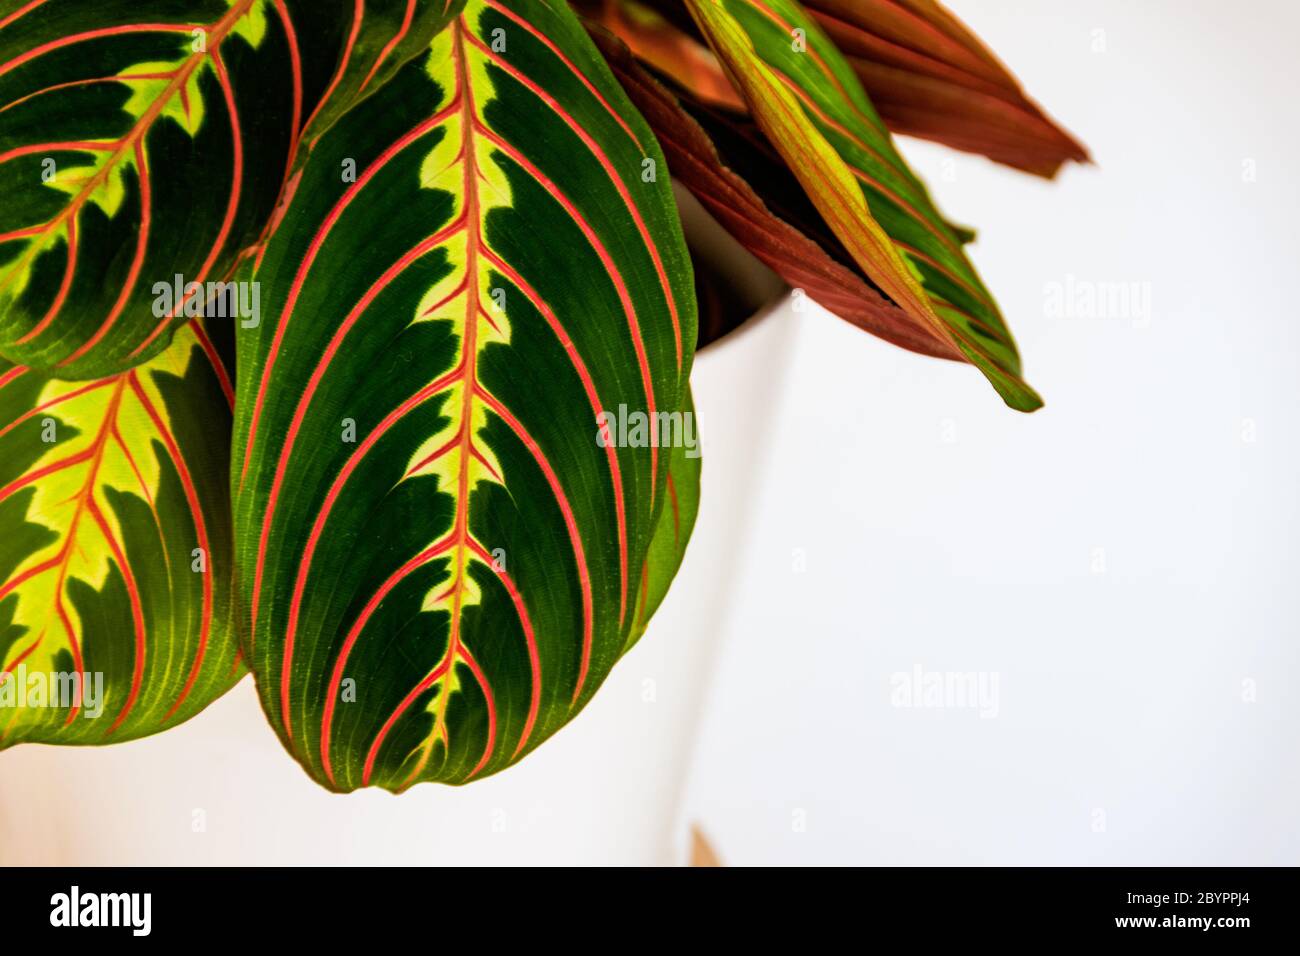 Close-up on the decorative, colorful leaves of a prayer plant (maranta leuconeura var. erythroneura) on white background. Exotic houseplant foliage on Stock Photo